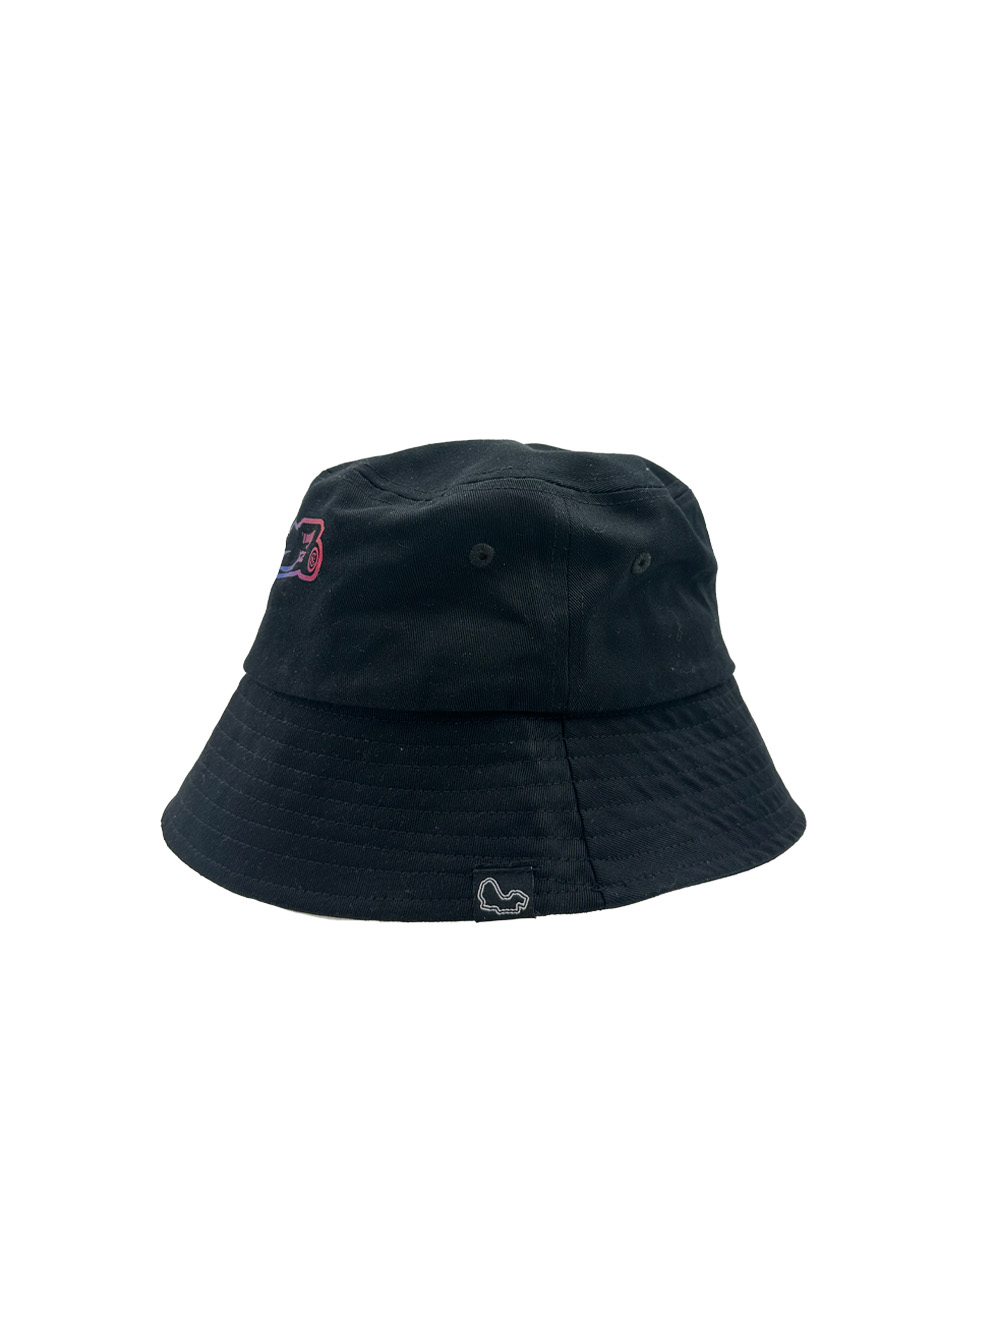 Ball Caps Ayrton Senna Bucket Hat Sun Shade Hats For Men From